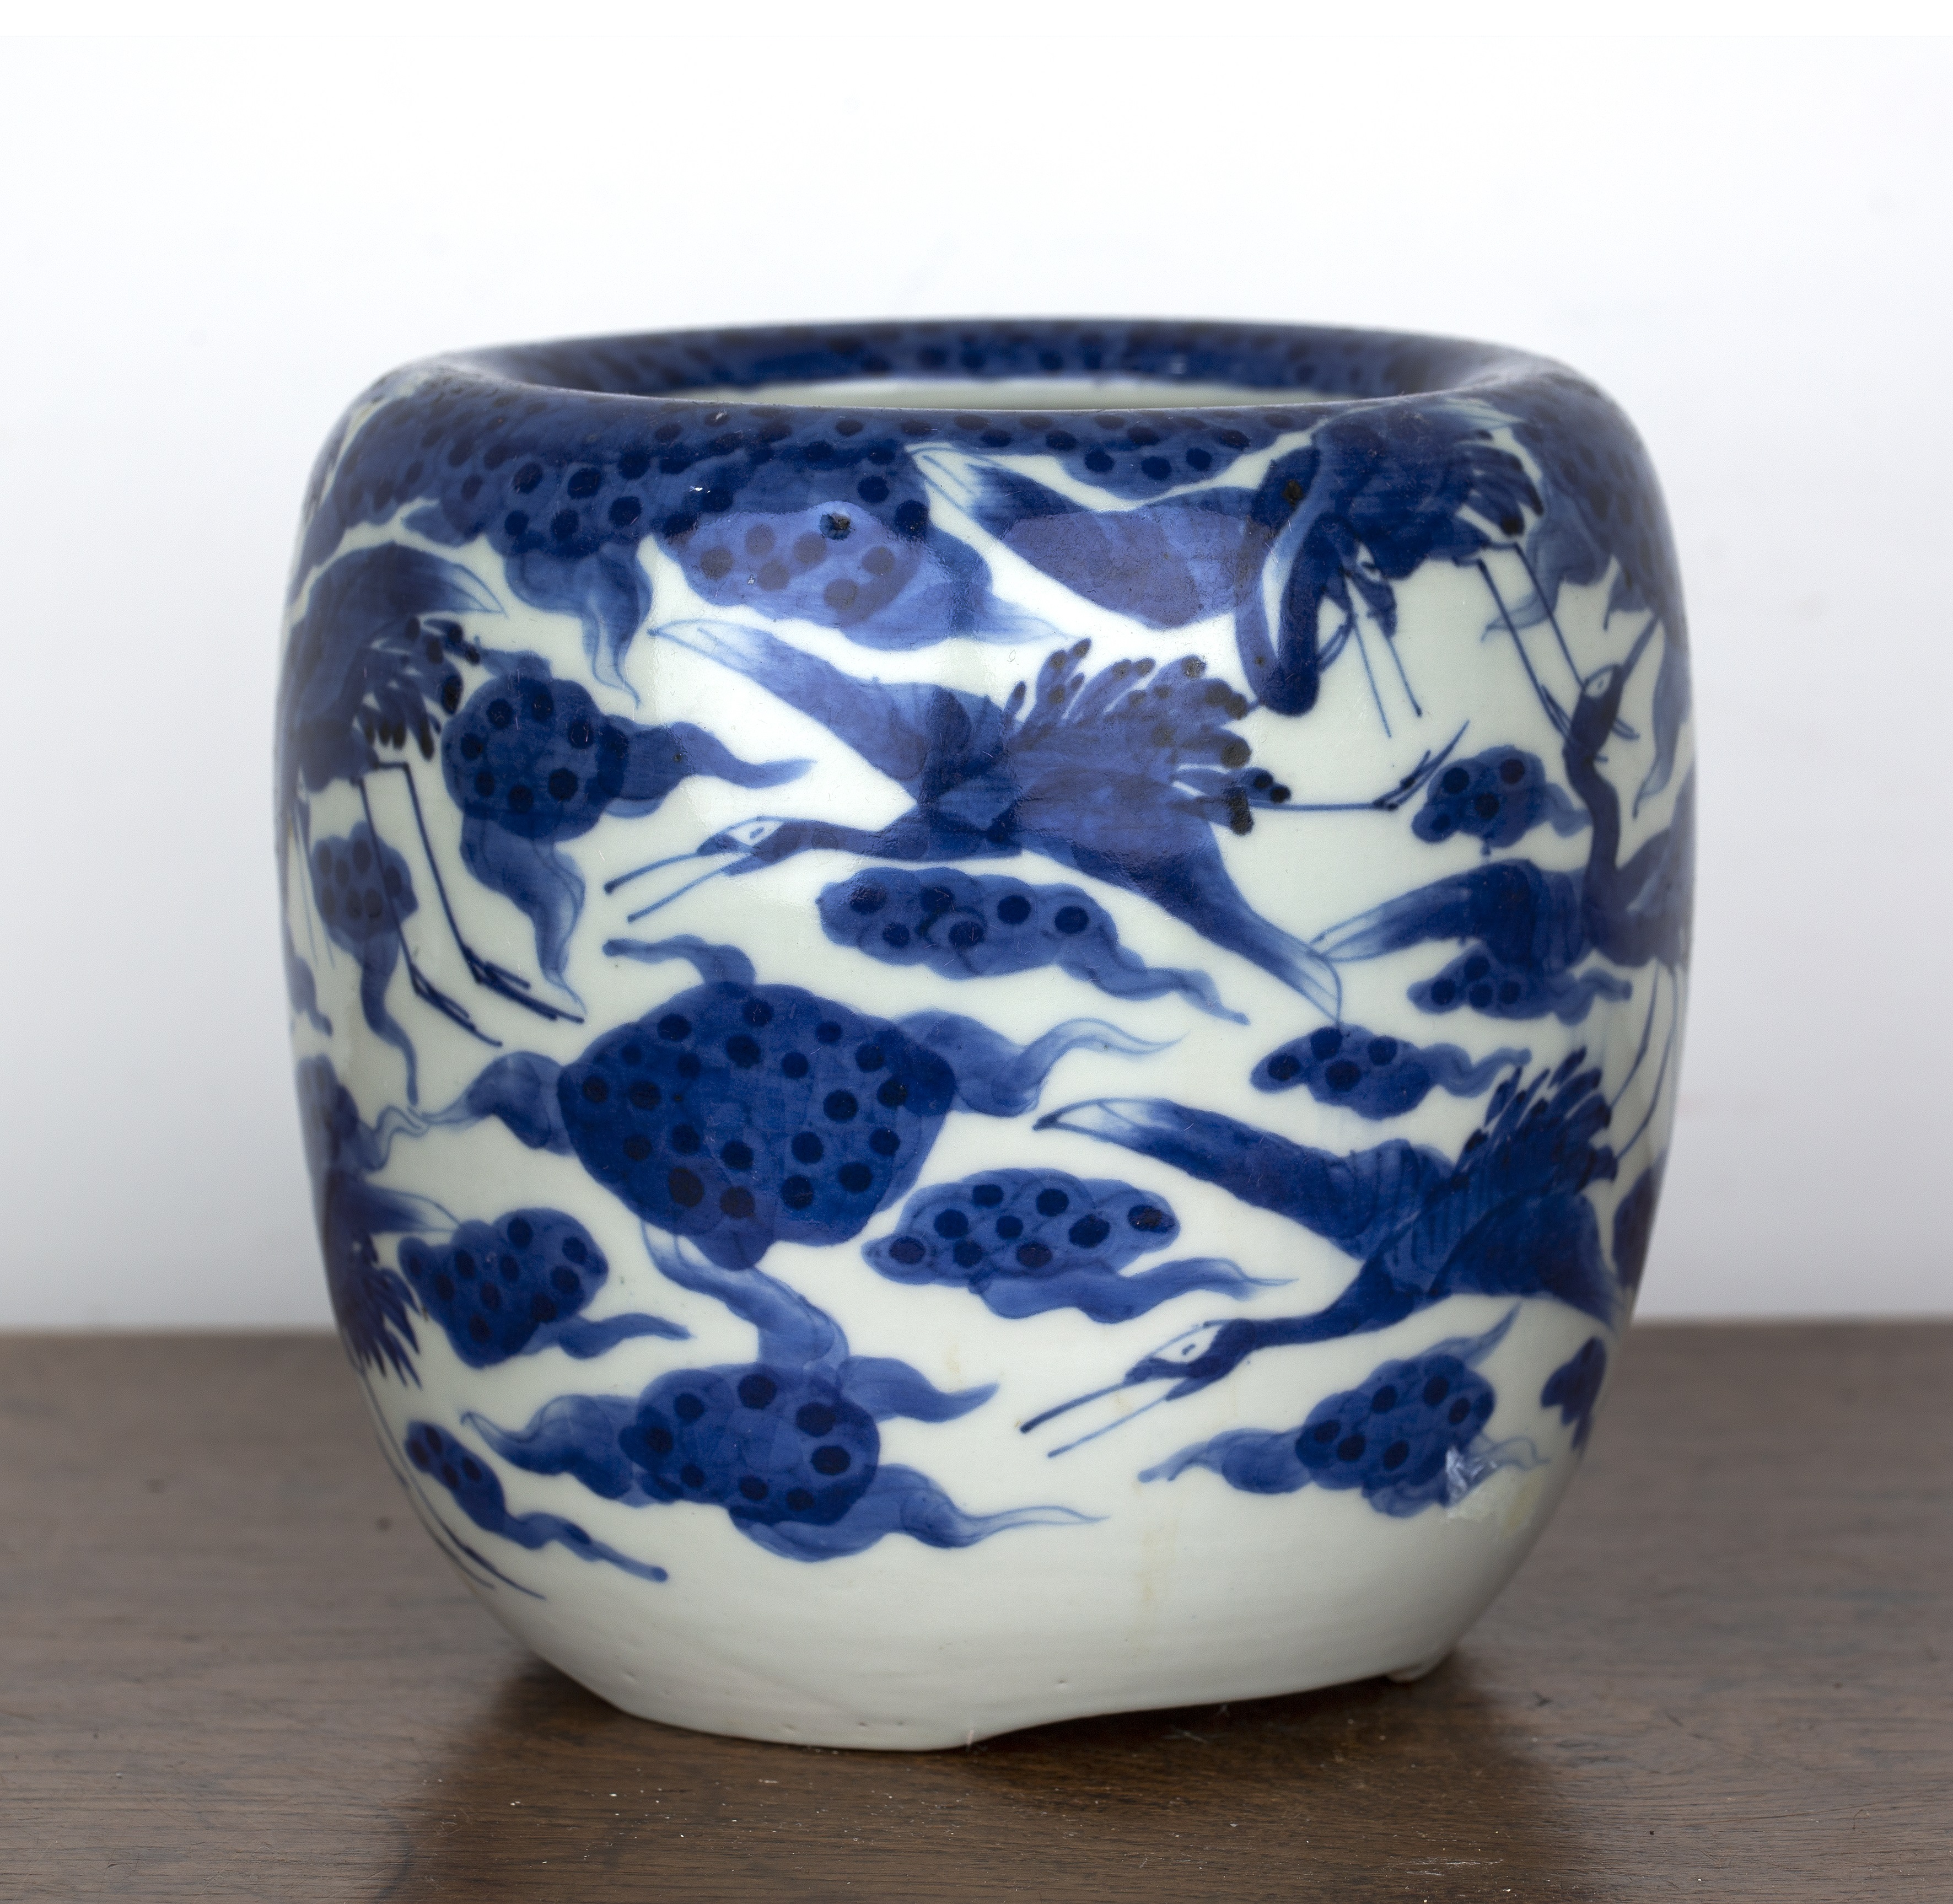 Blue and white porcelain jar Japanese painted with cranes in flight, 16.5cm high x 16.5cm diameter - Bild 3 aus 4